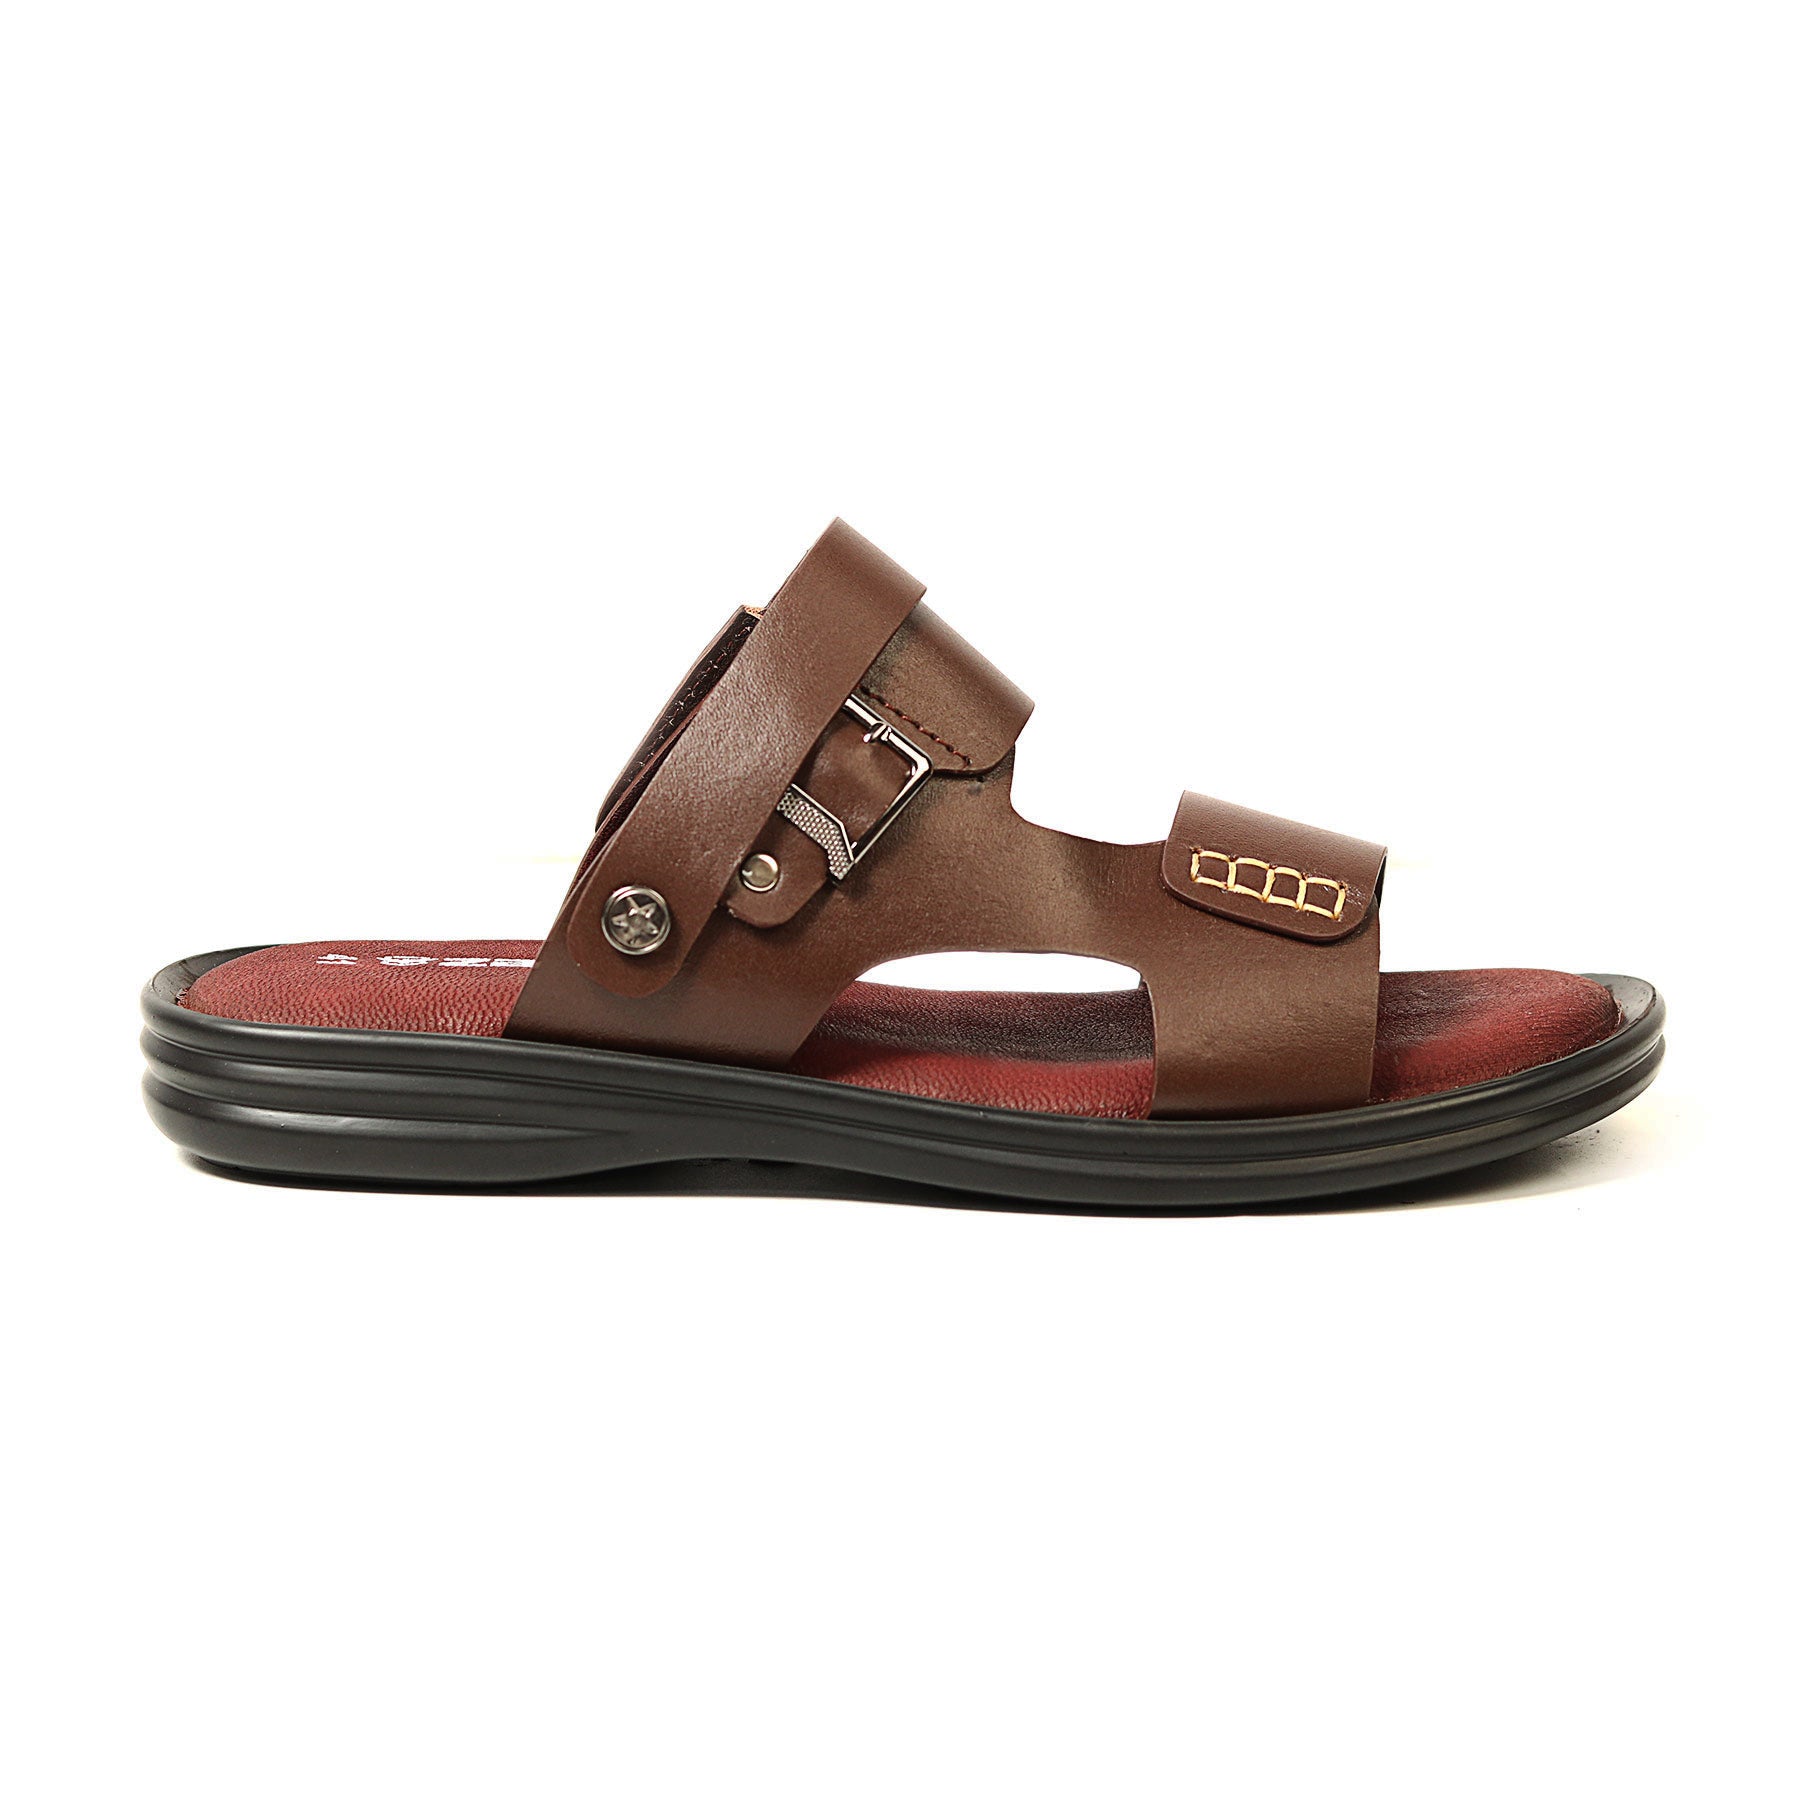 Zays Leather Sandal For Men (Chocolate) - ZA15